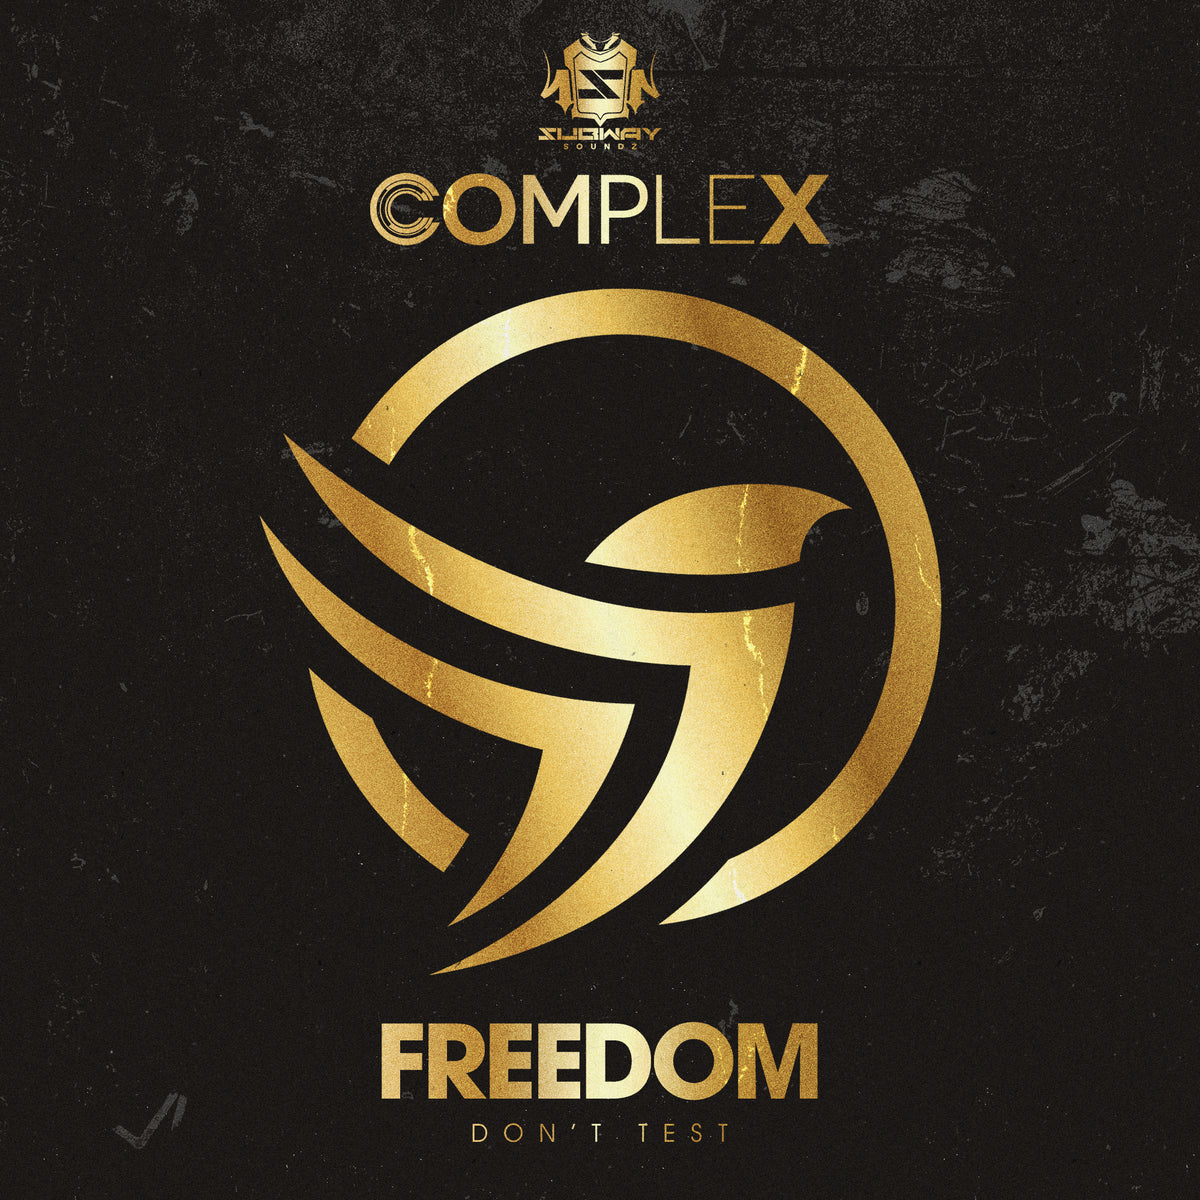 SSLD 110 - Complex 'Freedom' / 'Don't Test'